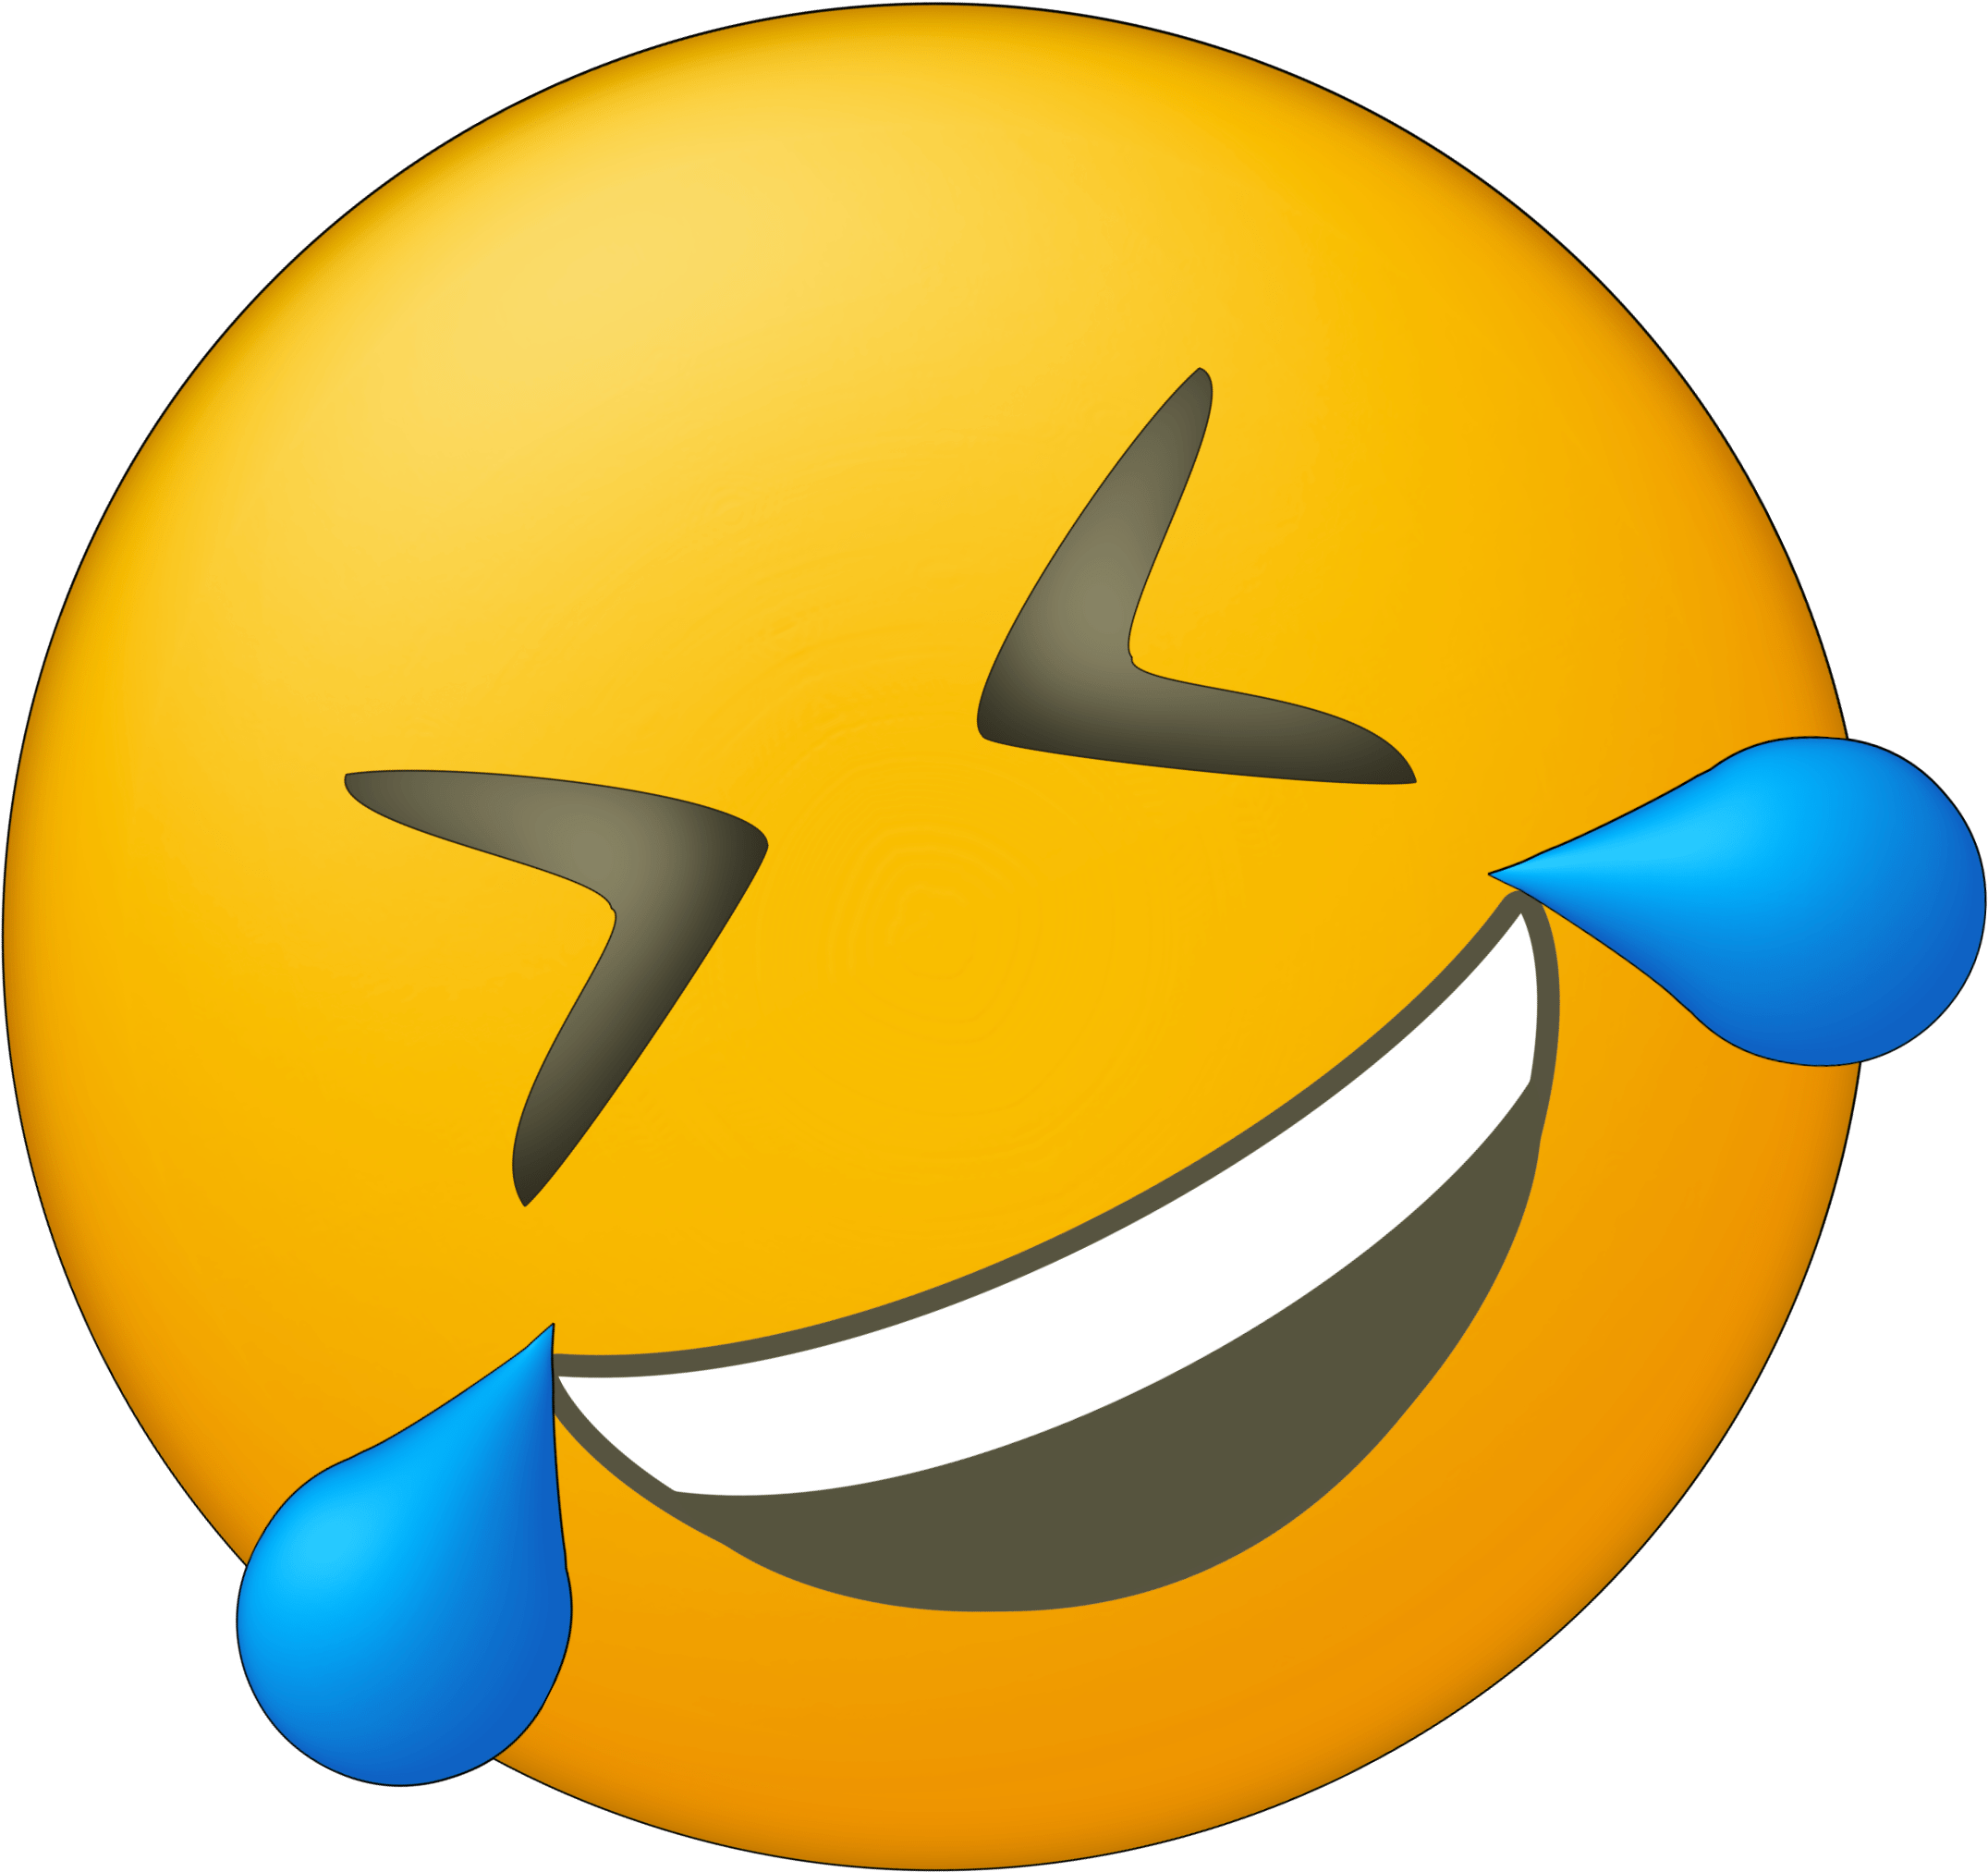 Cry Laughing Emoji PNG Transparent